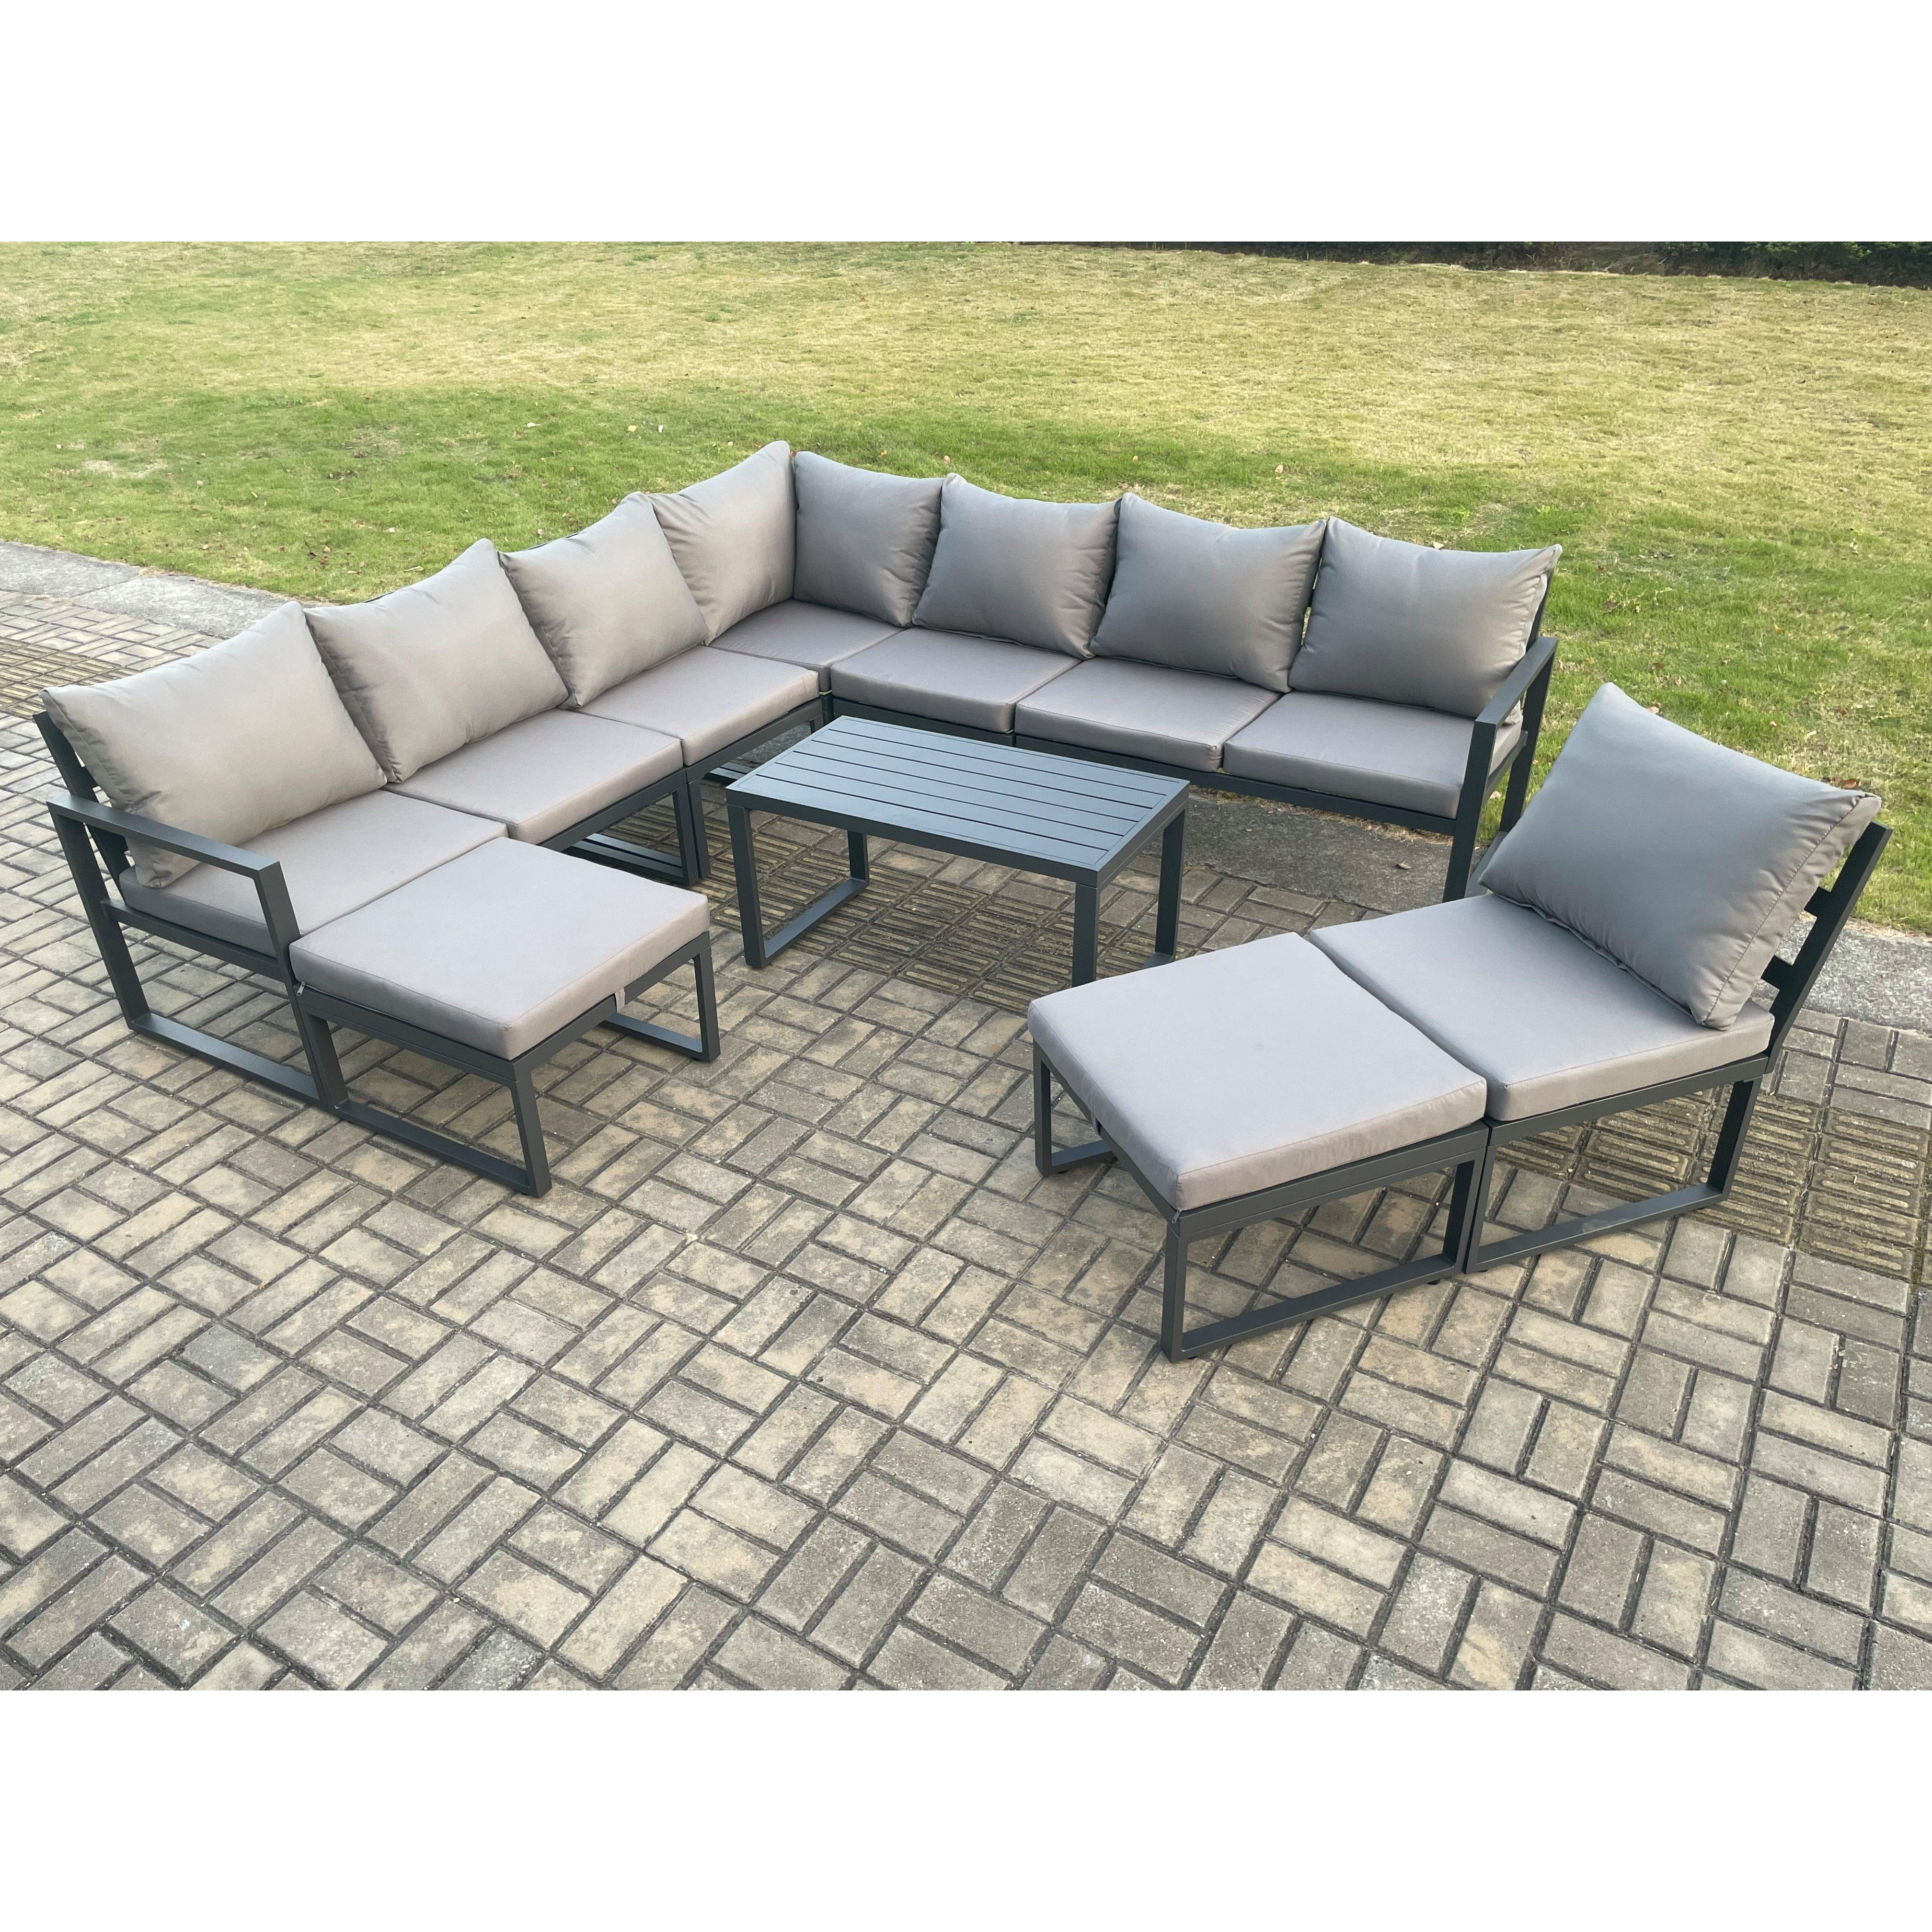 Aluminium 10 Seater Patio Outdoor Garden Furniture Lounge Corner Sofa Set with Oblong Coffee Table 2 Big Footstools Dark Grey - image 1